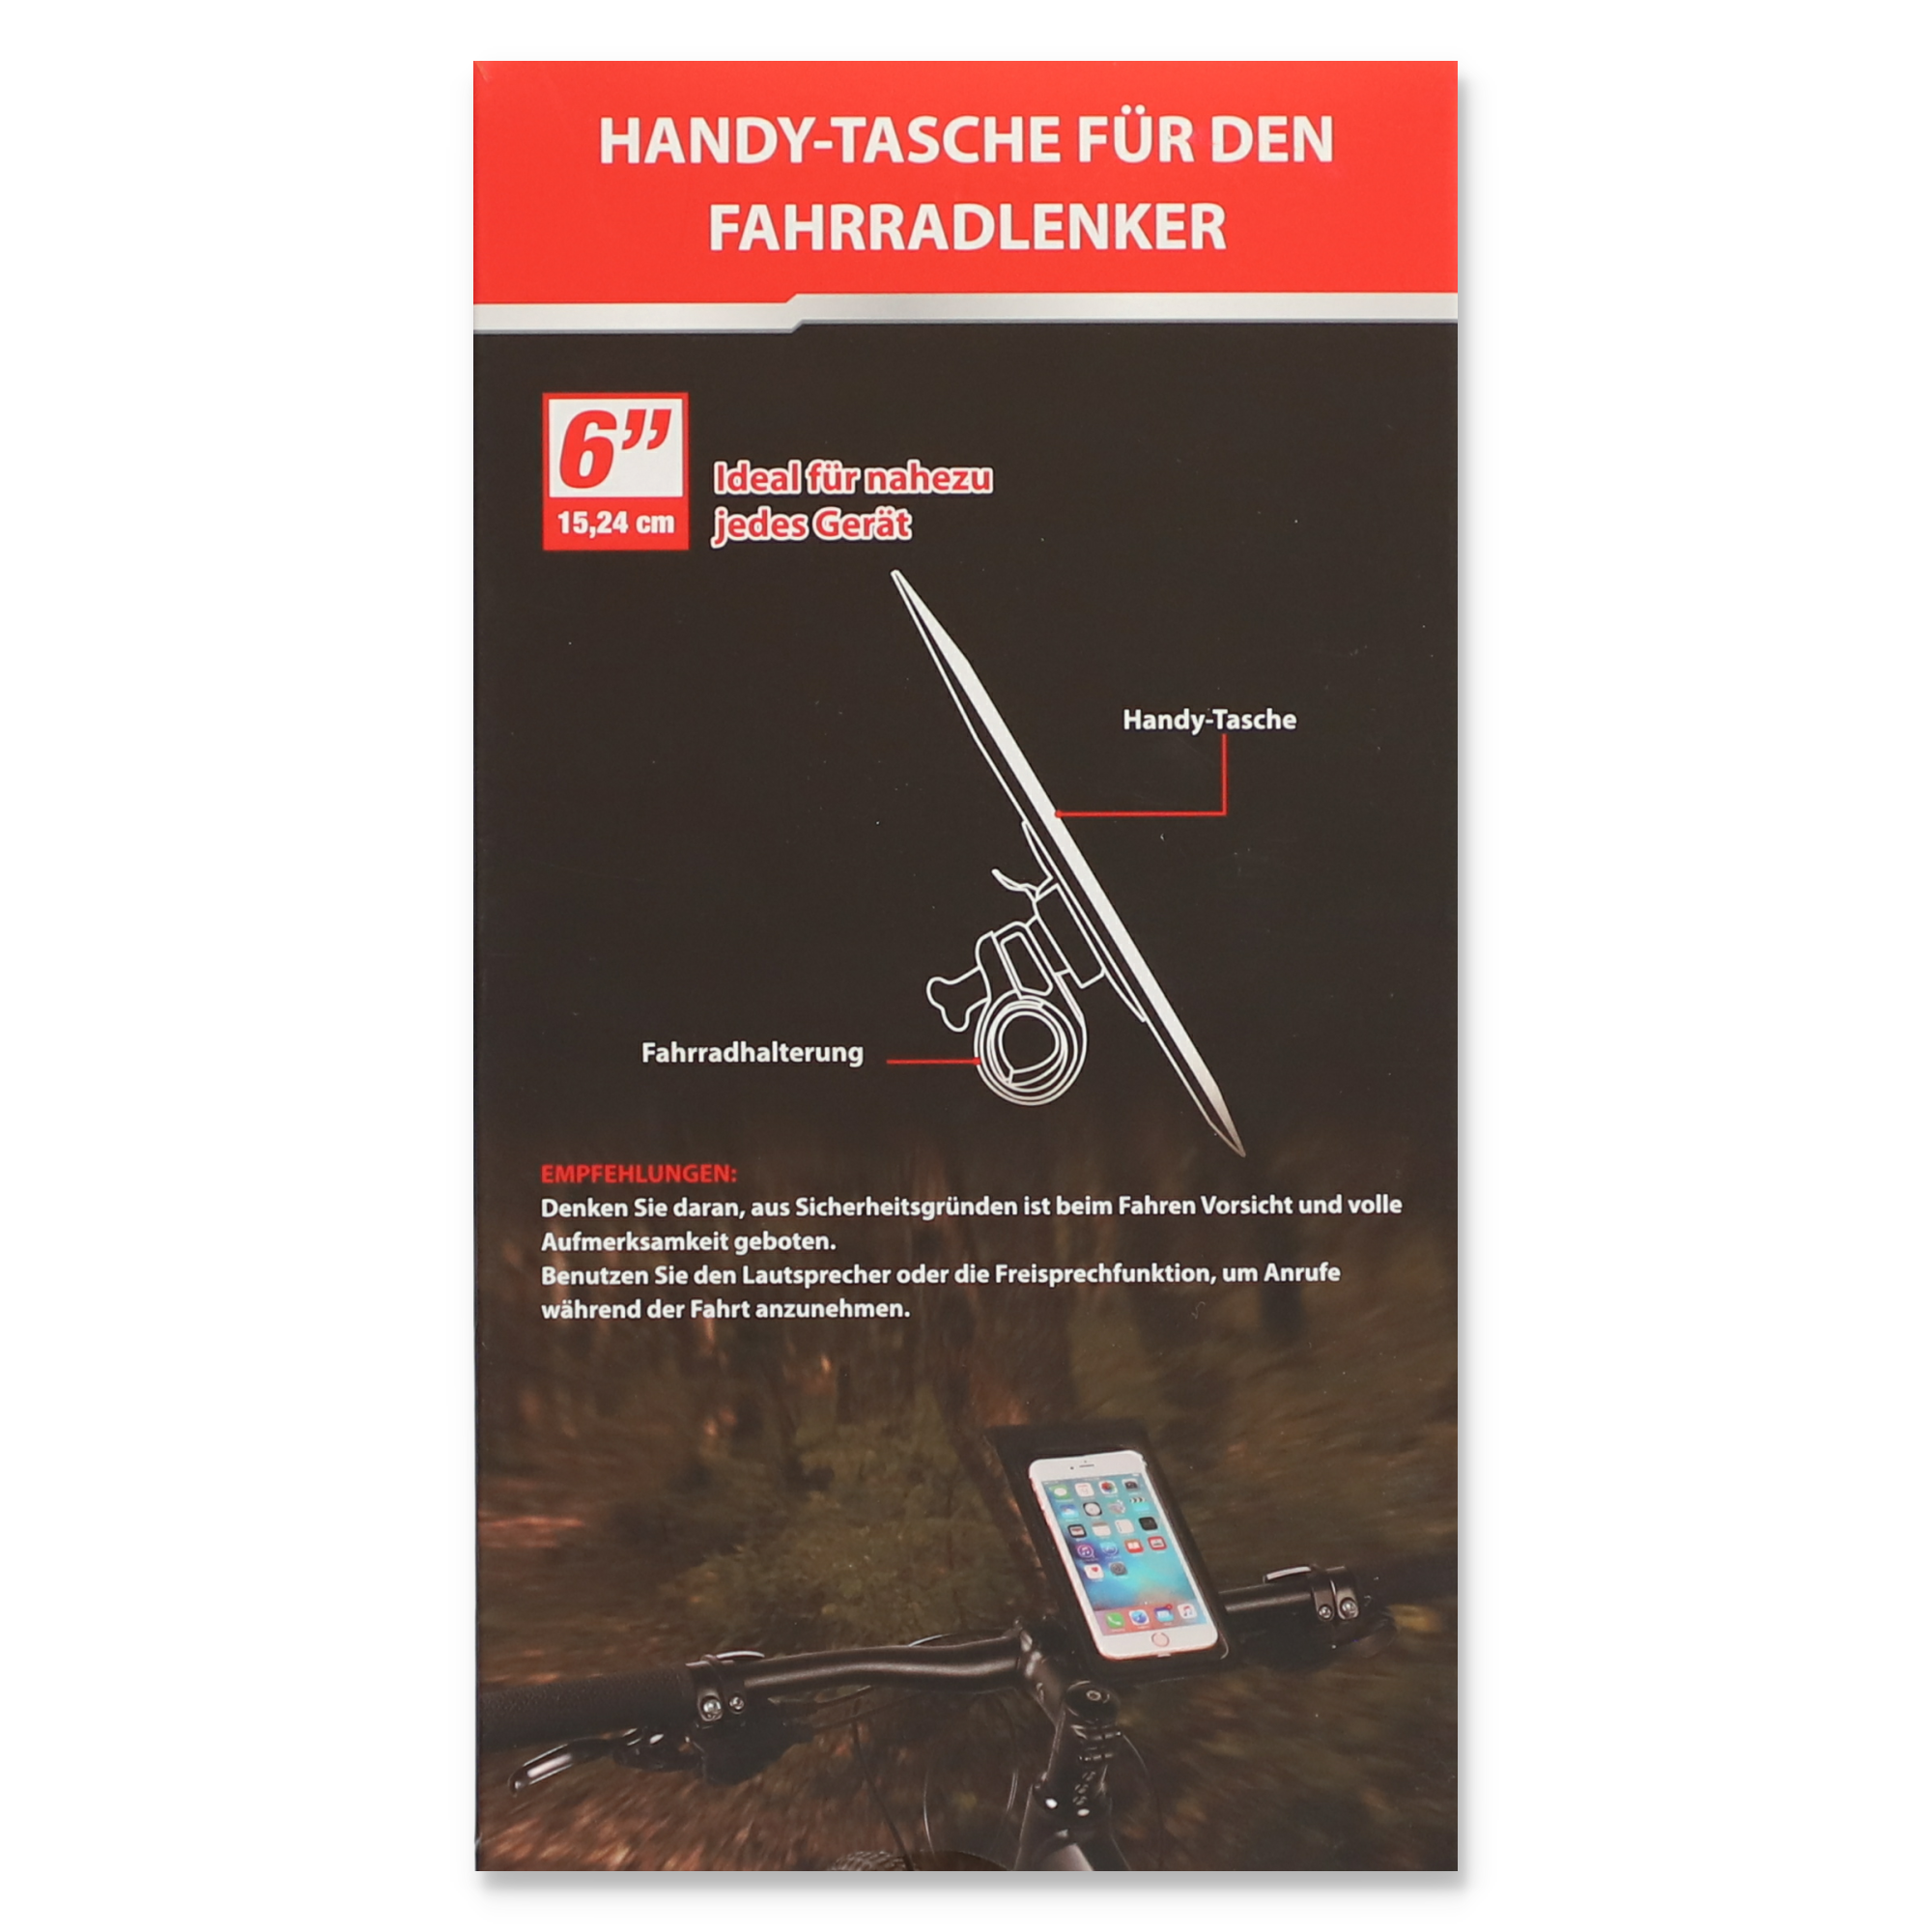 Handy-Fahrradtasche schwarz 21 x 11,5 cm + product picture